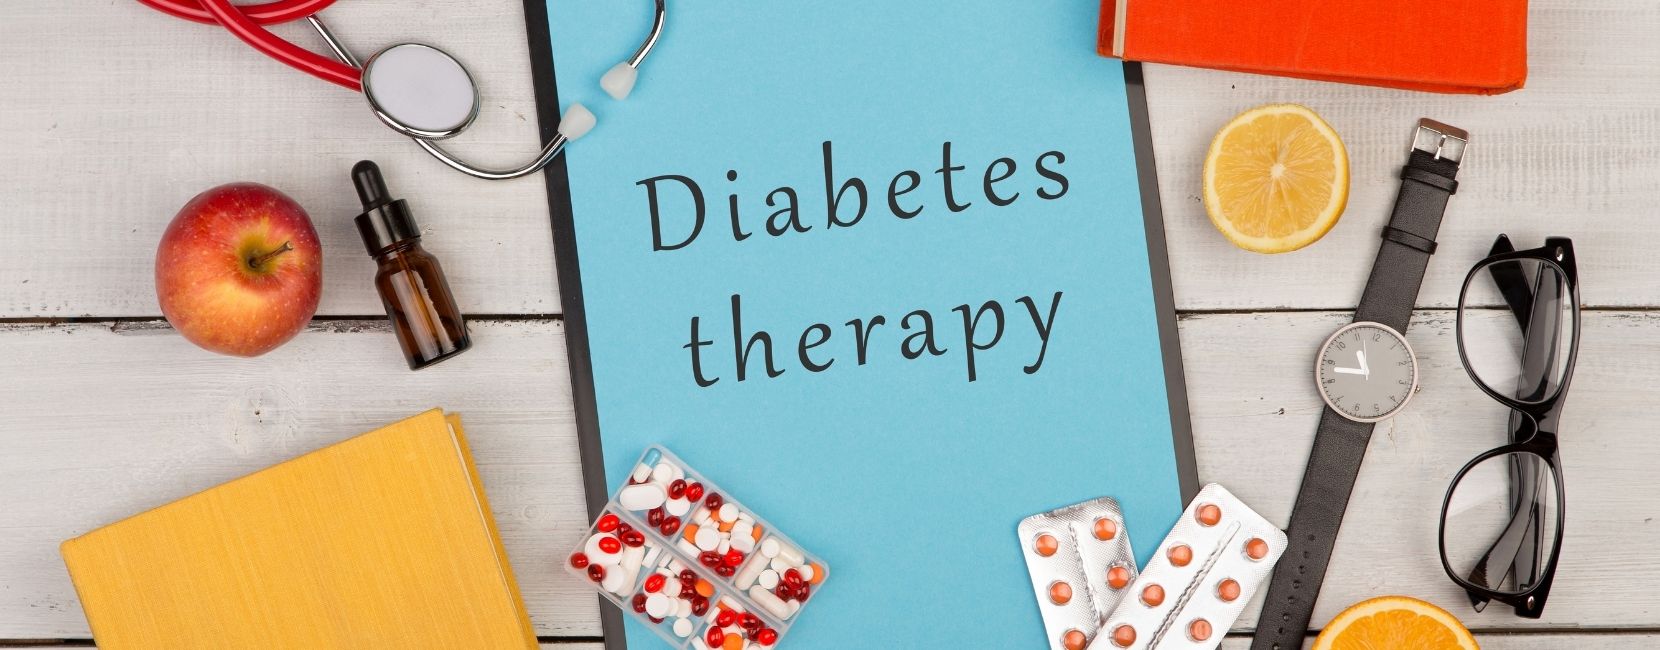 terapija-za-dijabetes-featured-image